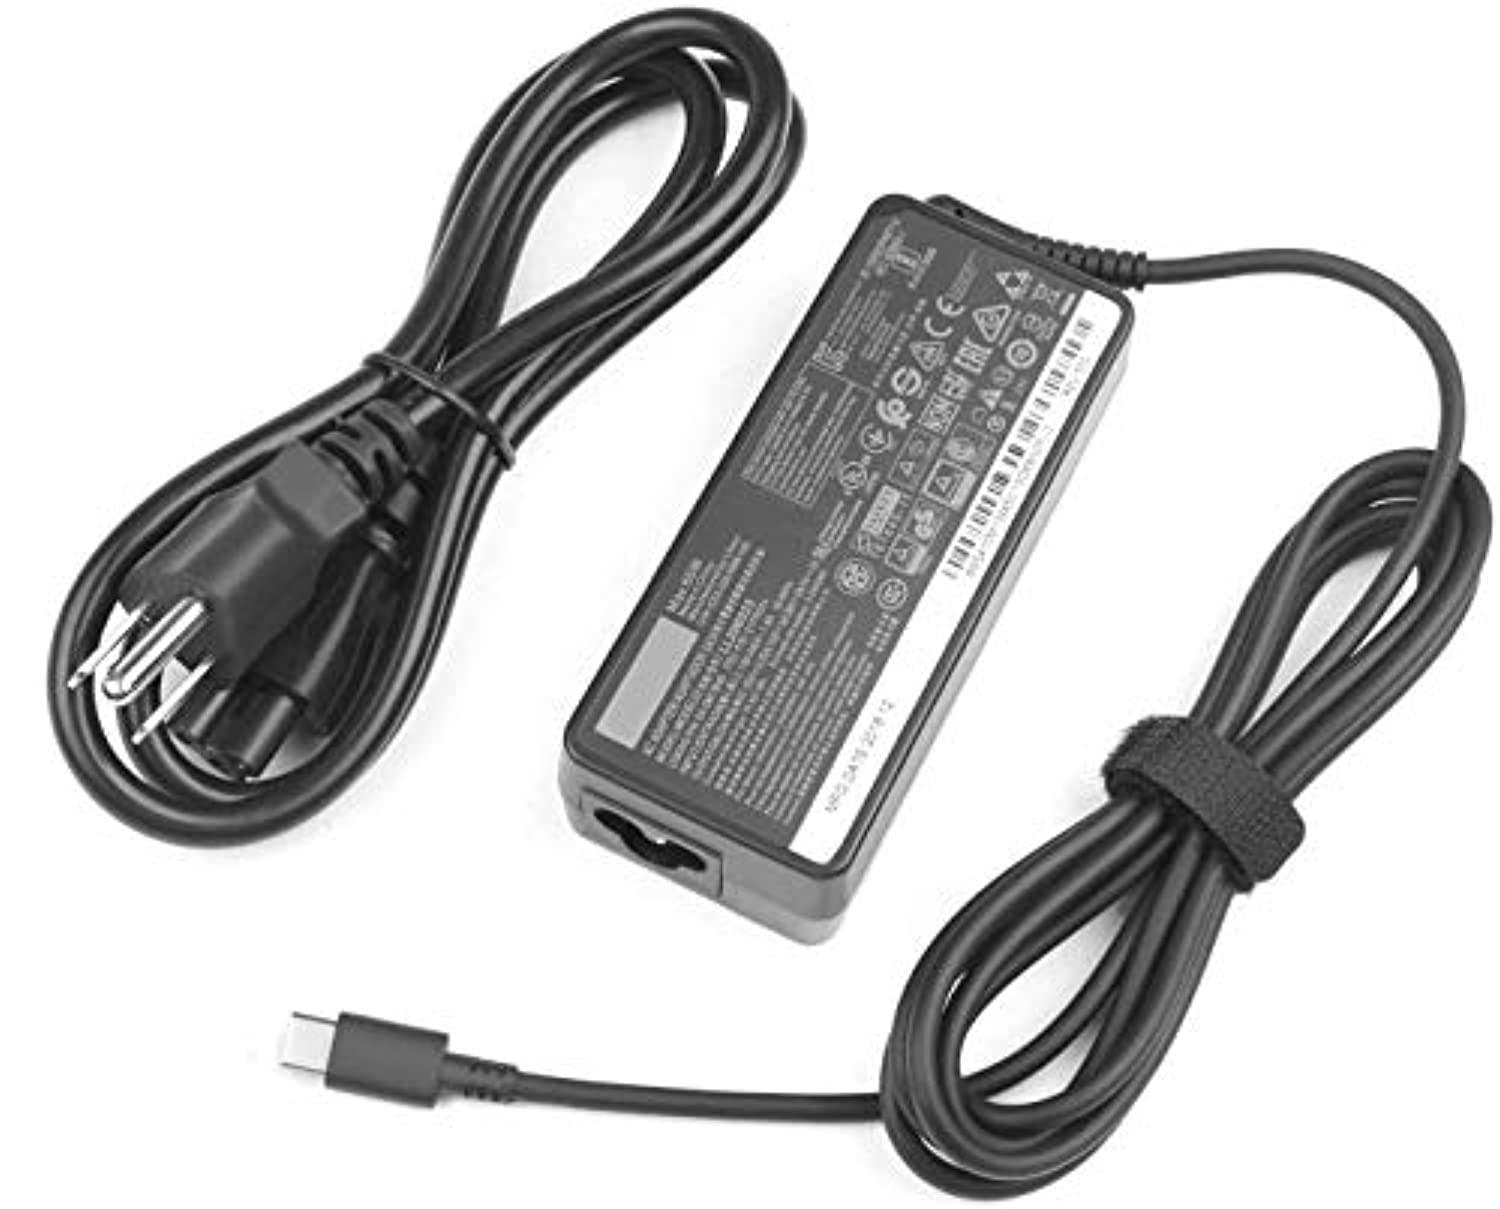 Delight Tordor new ac charger fit for lenovo thinkpad e580 e585 e590 e590s e595 20ks 20kv 20nb laptop power supply adapter cord 65w usb c